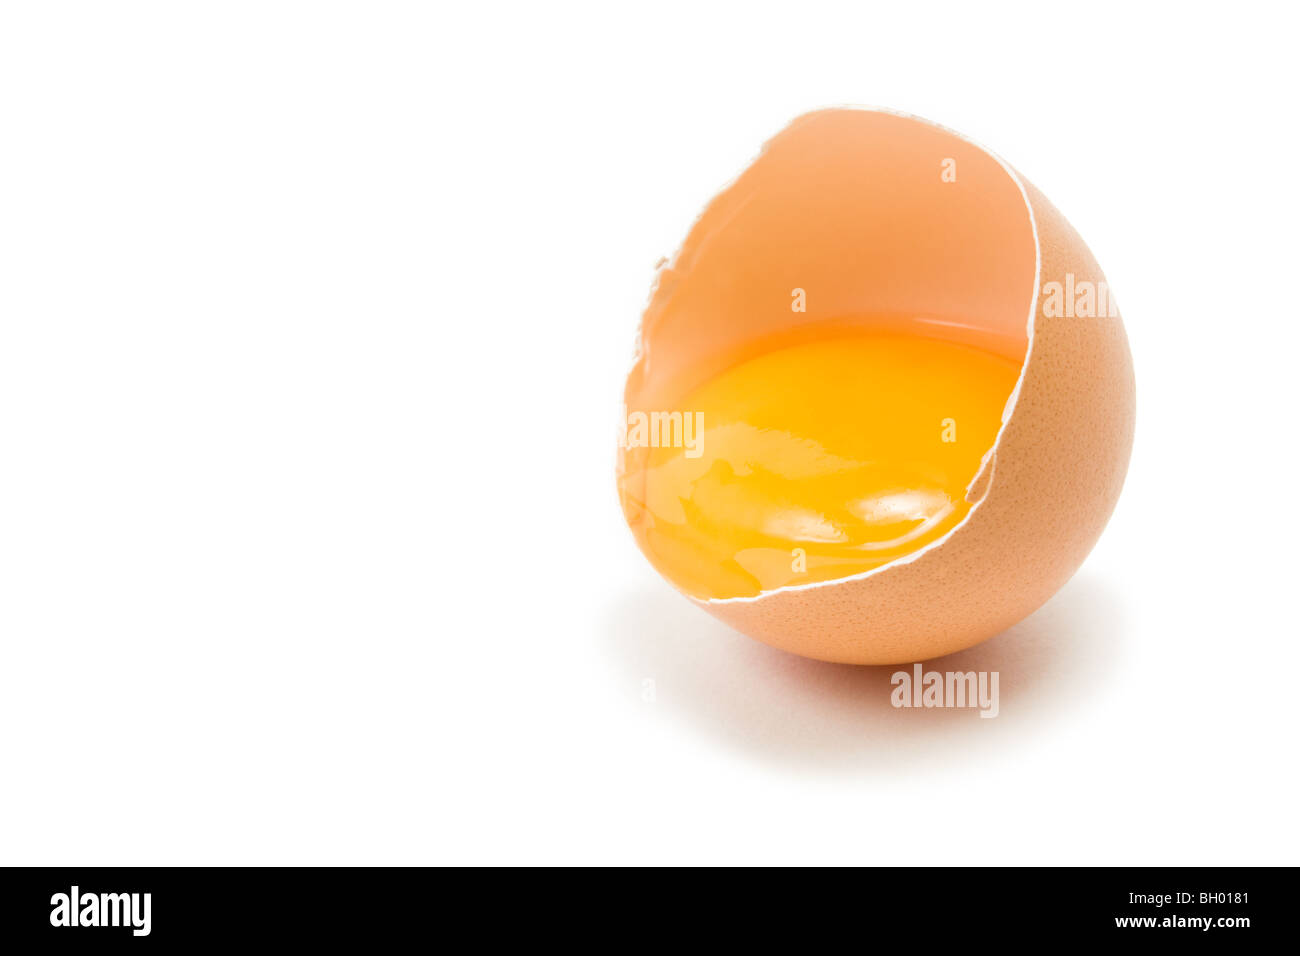 Single cracked open Hens Egg showing yolk isolated against white background Stock Photo